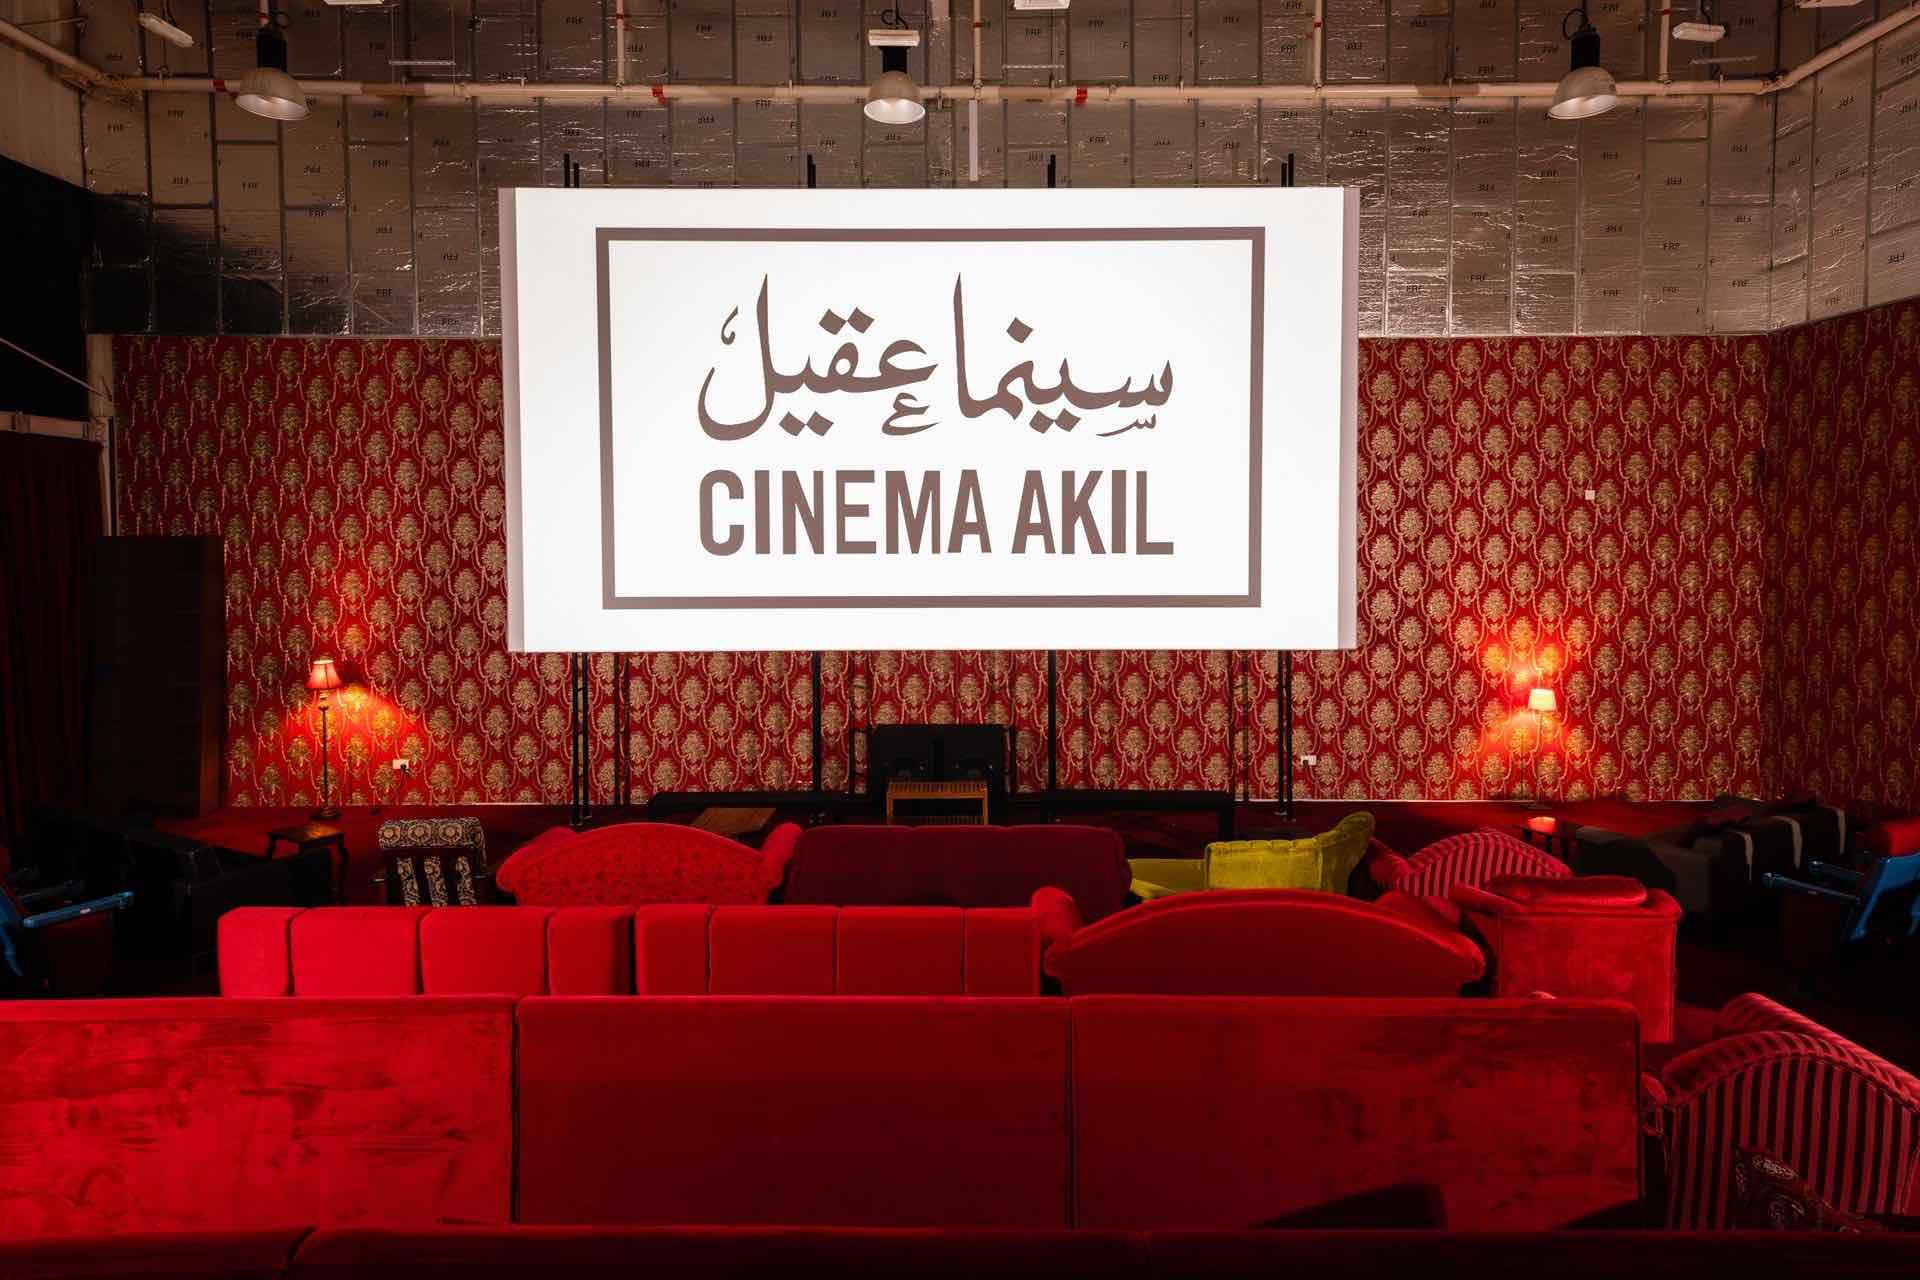 Cinema Akil to honour film director Federico Fellini with Italian Film Week